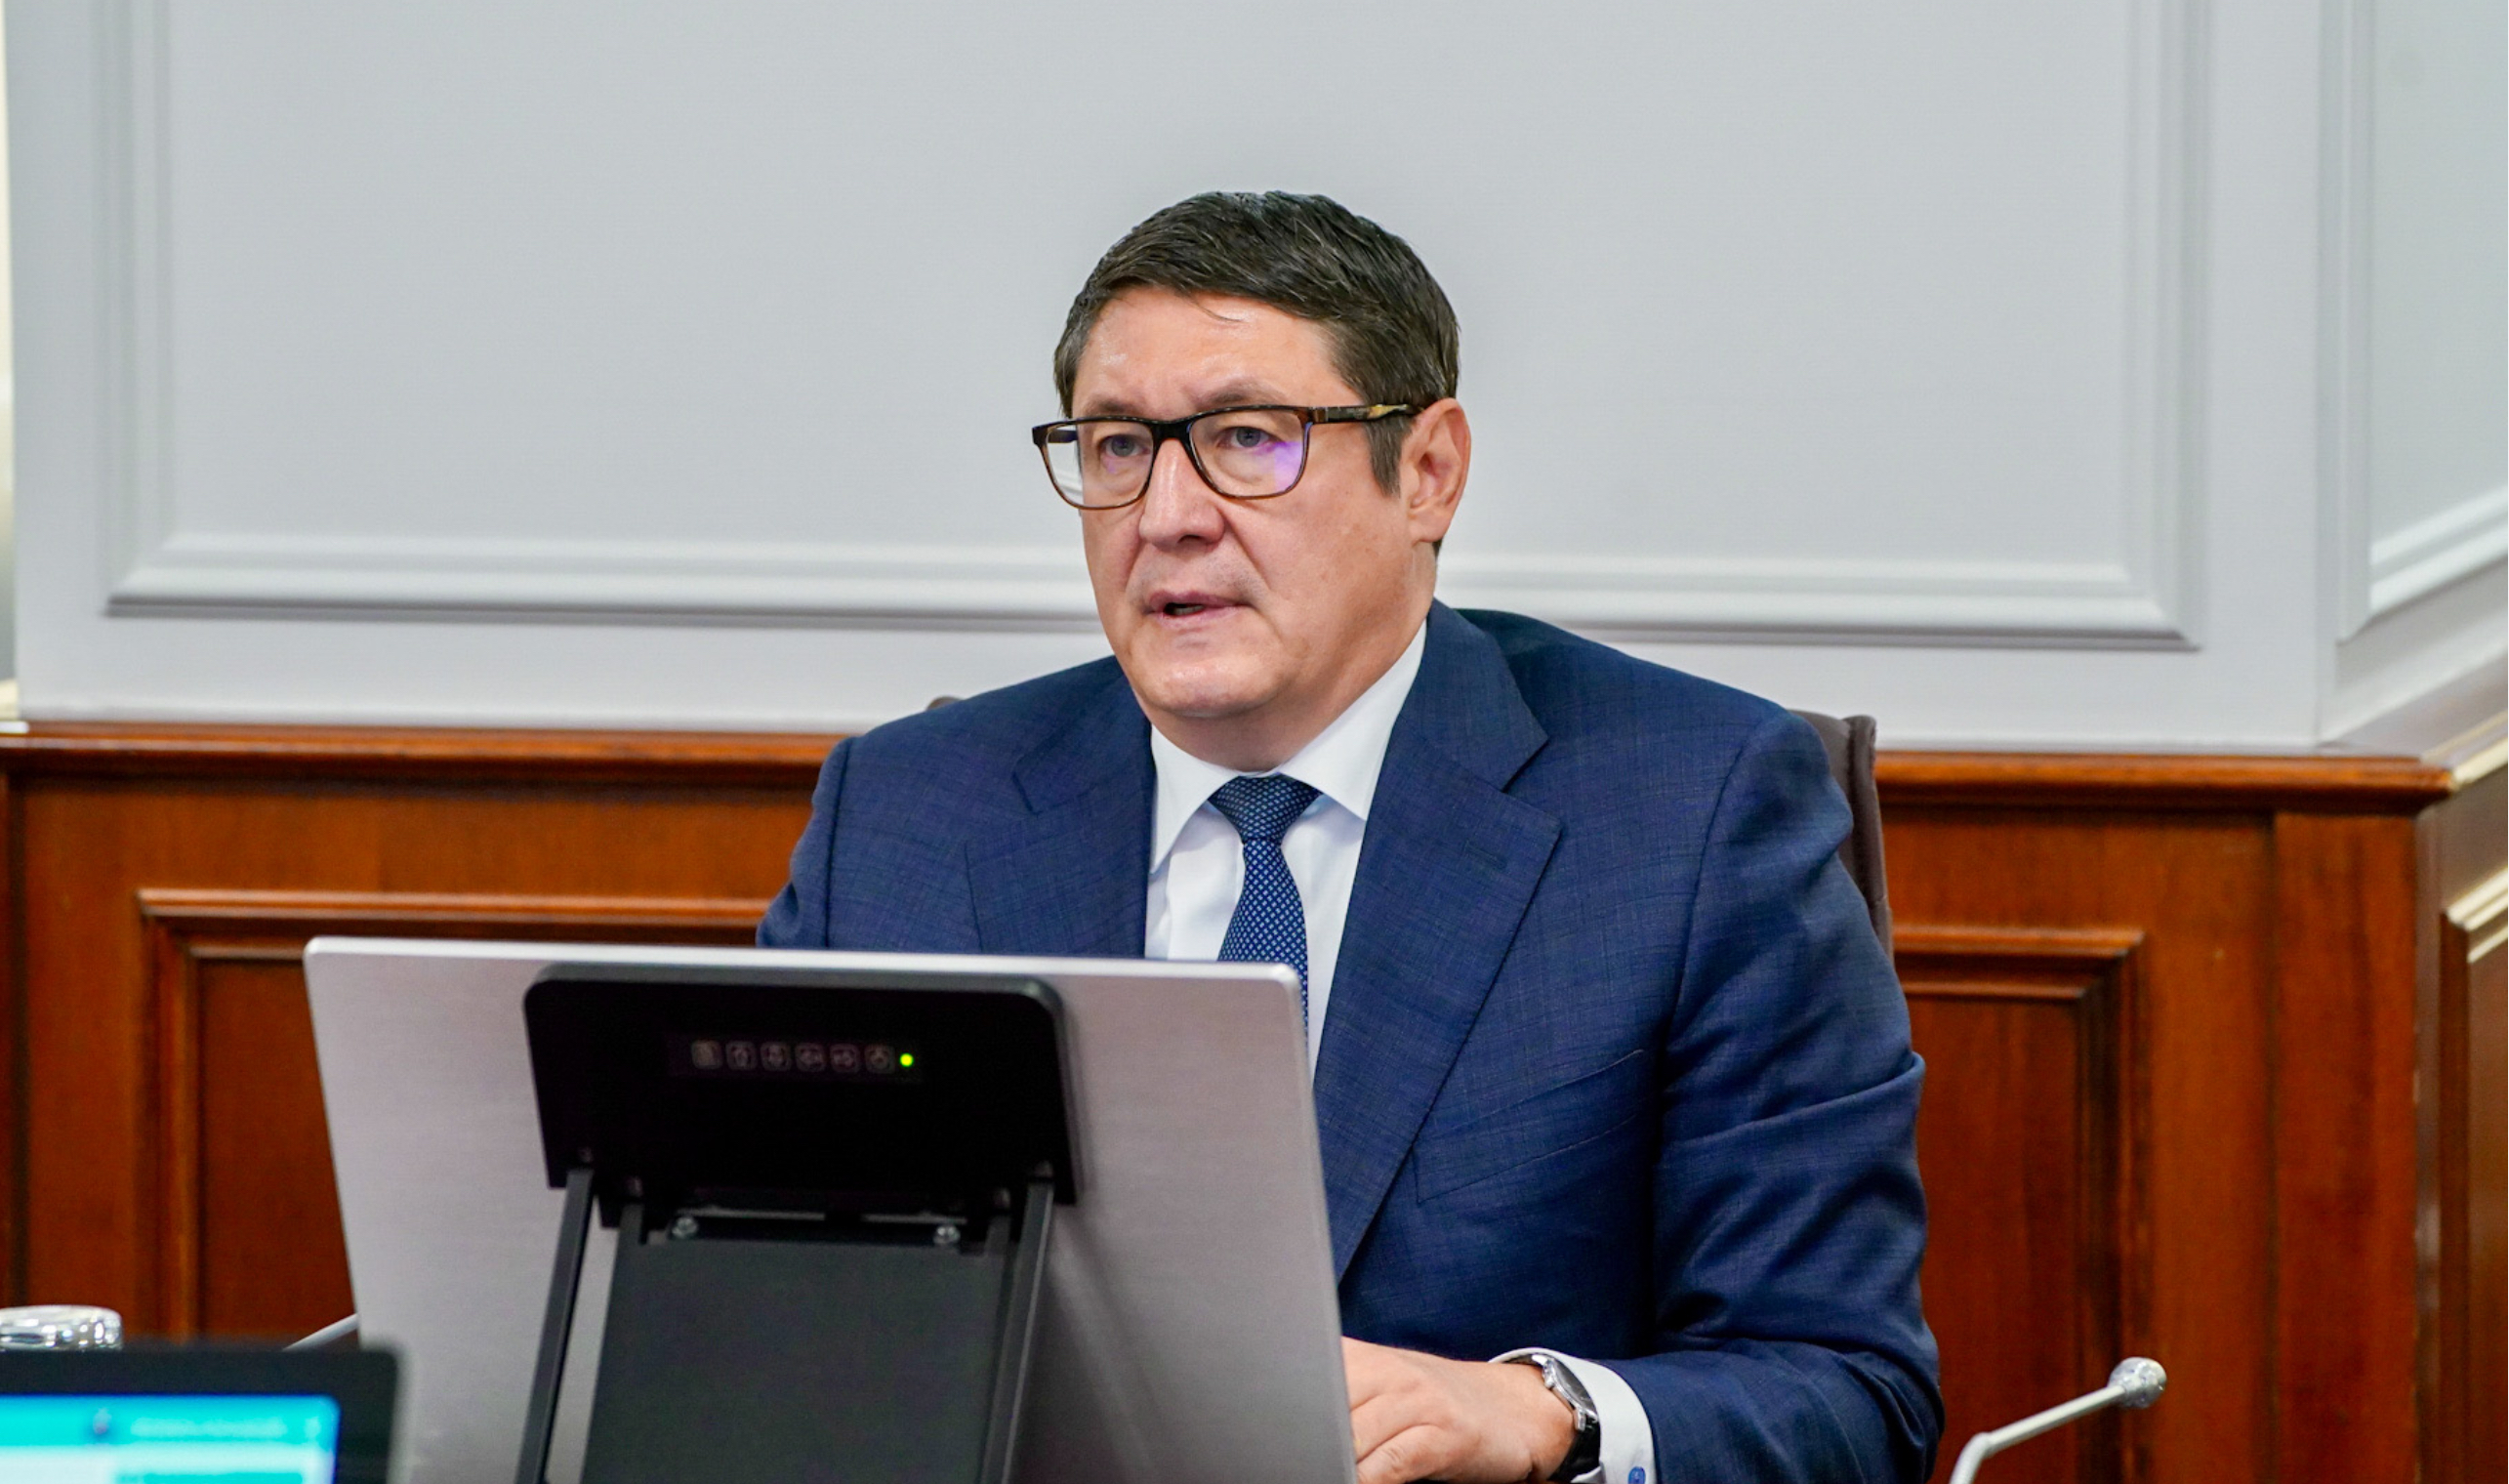 Energy Minister of Kazakhstan, Almassadam Satkaliyev